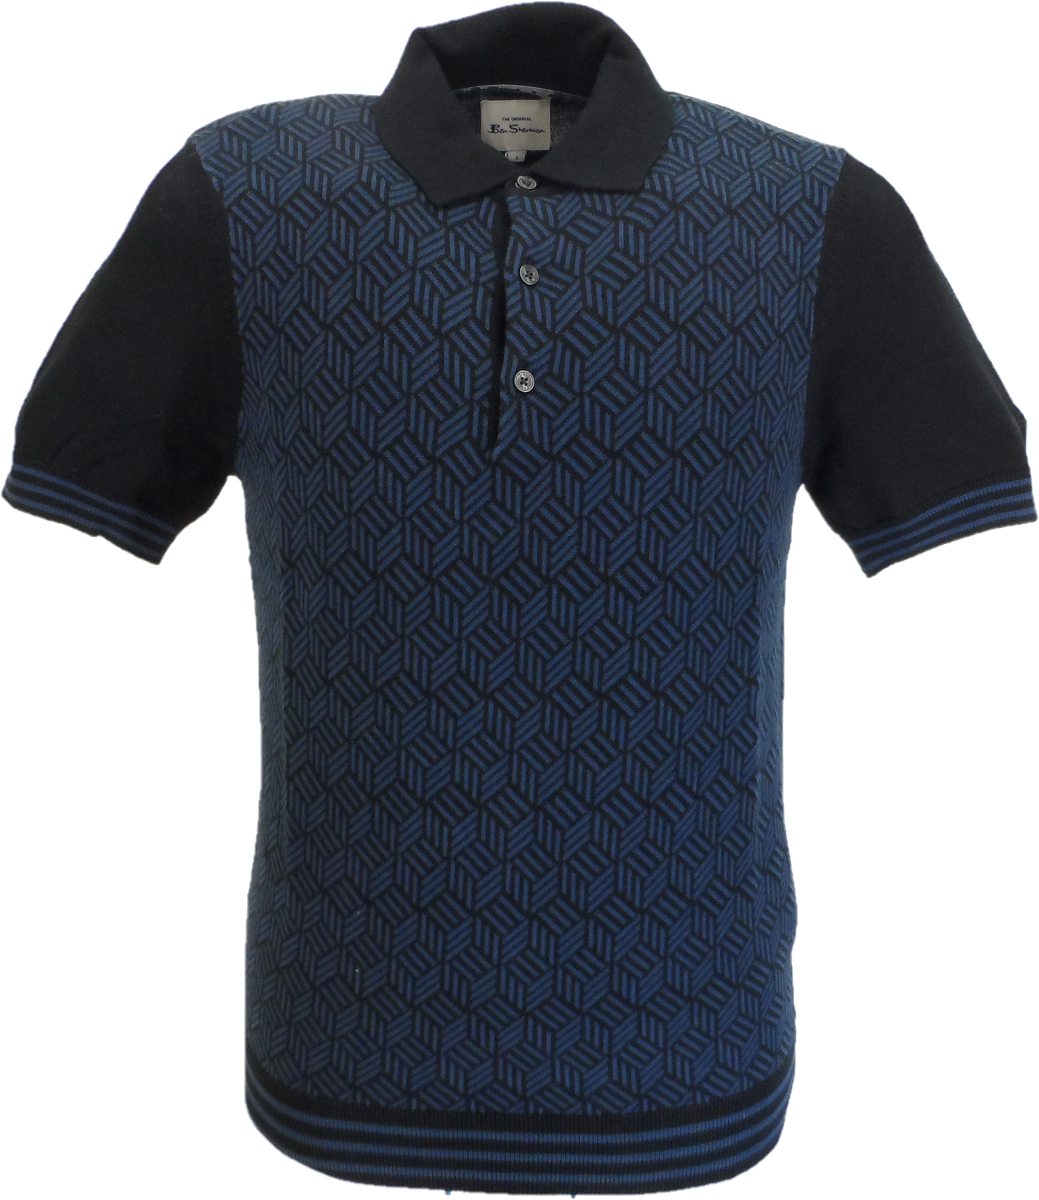 Ben Sherman Black Knitted Jacquard Mod Polo Shirt